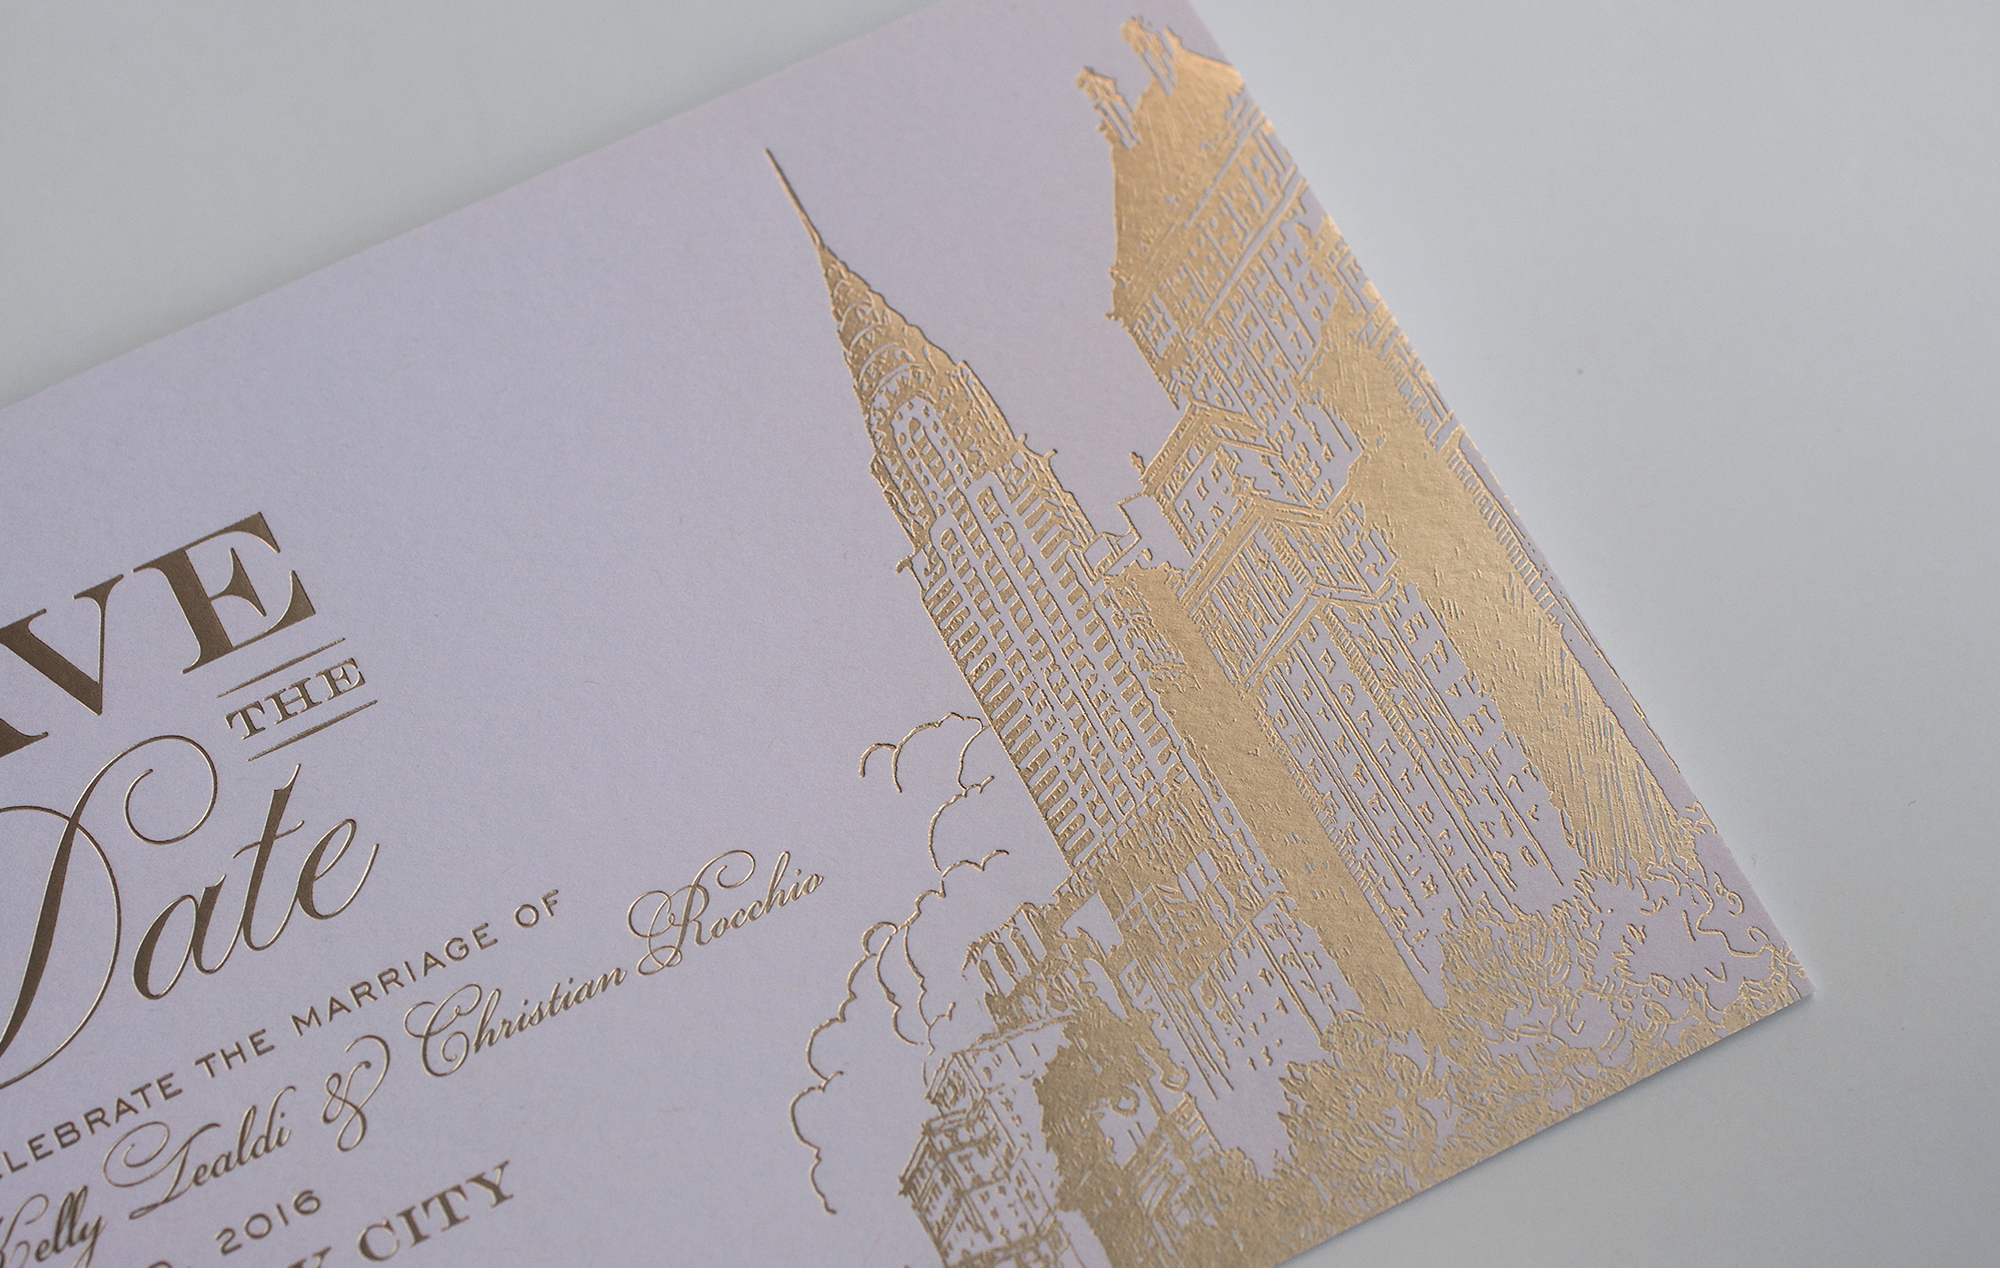 Chrysler Building printed in gold foil